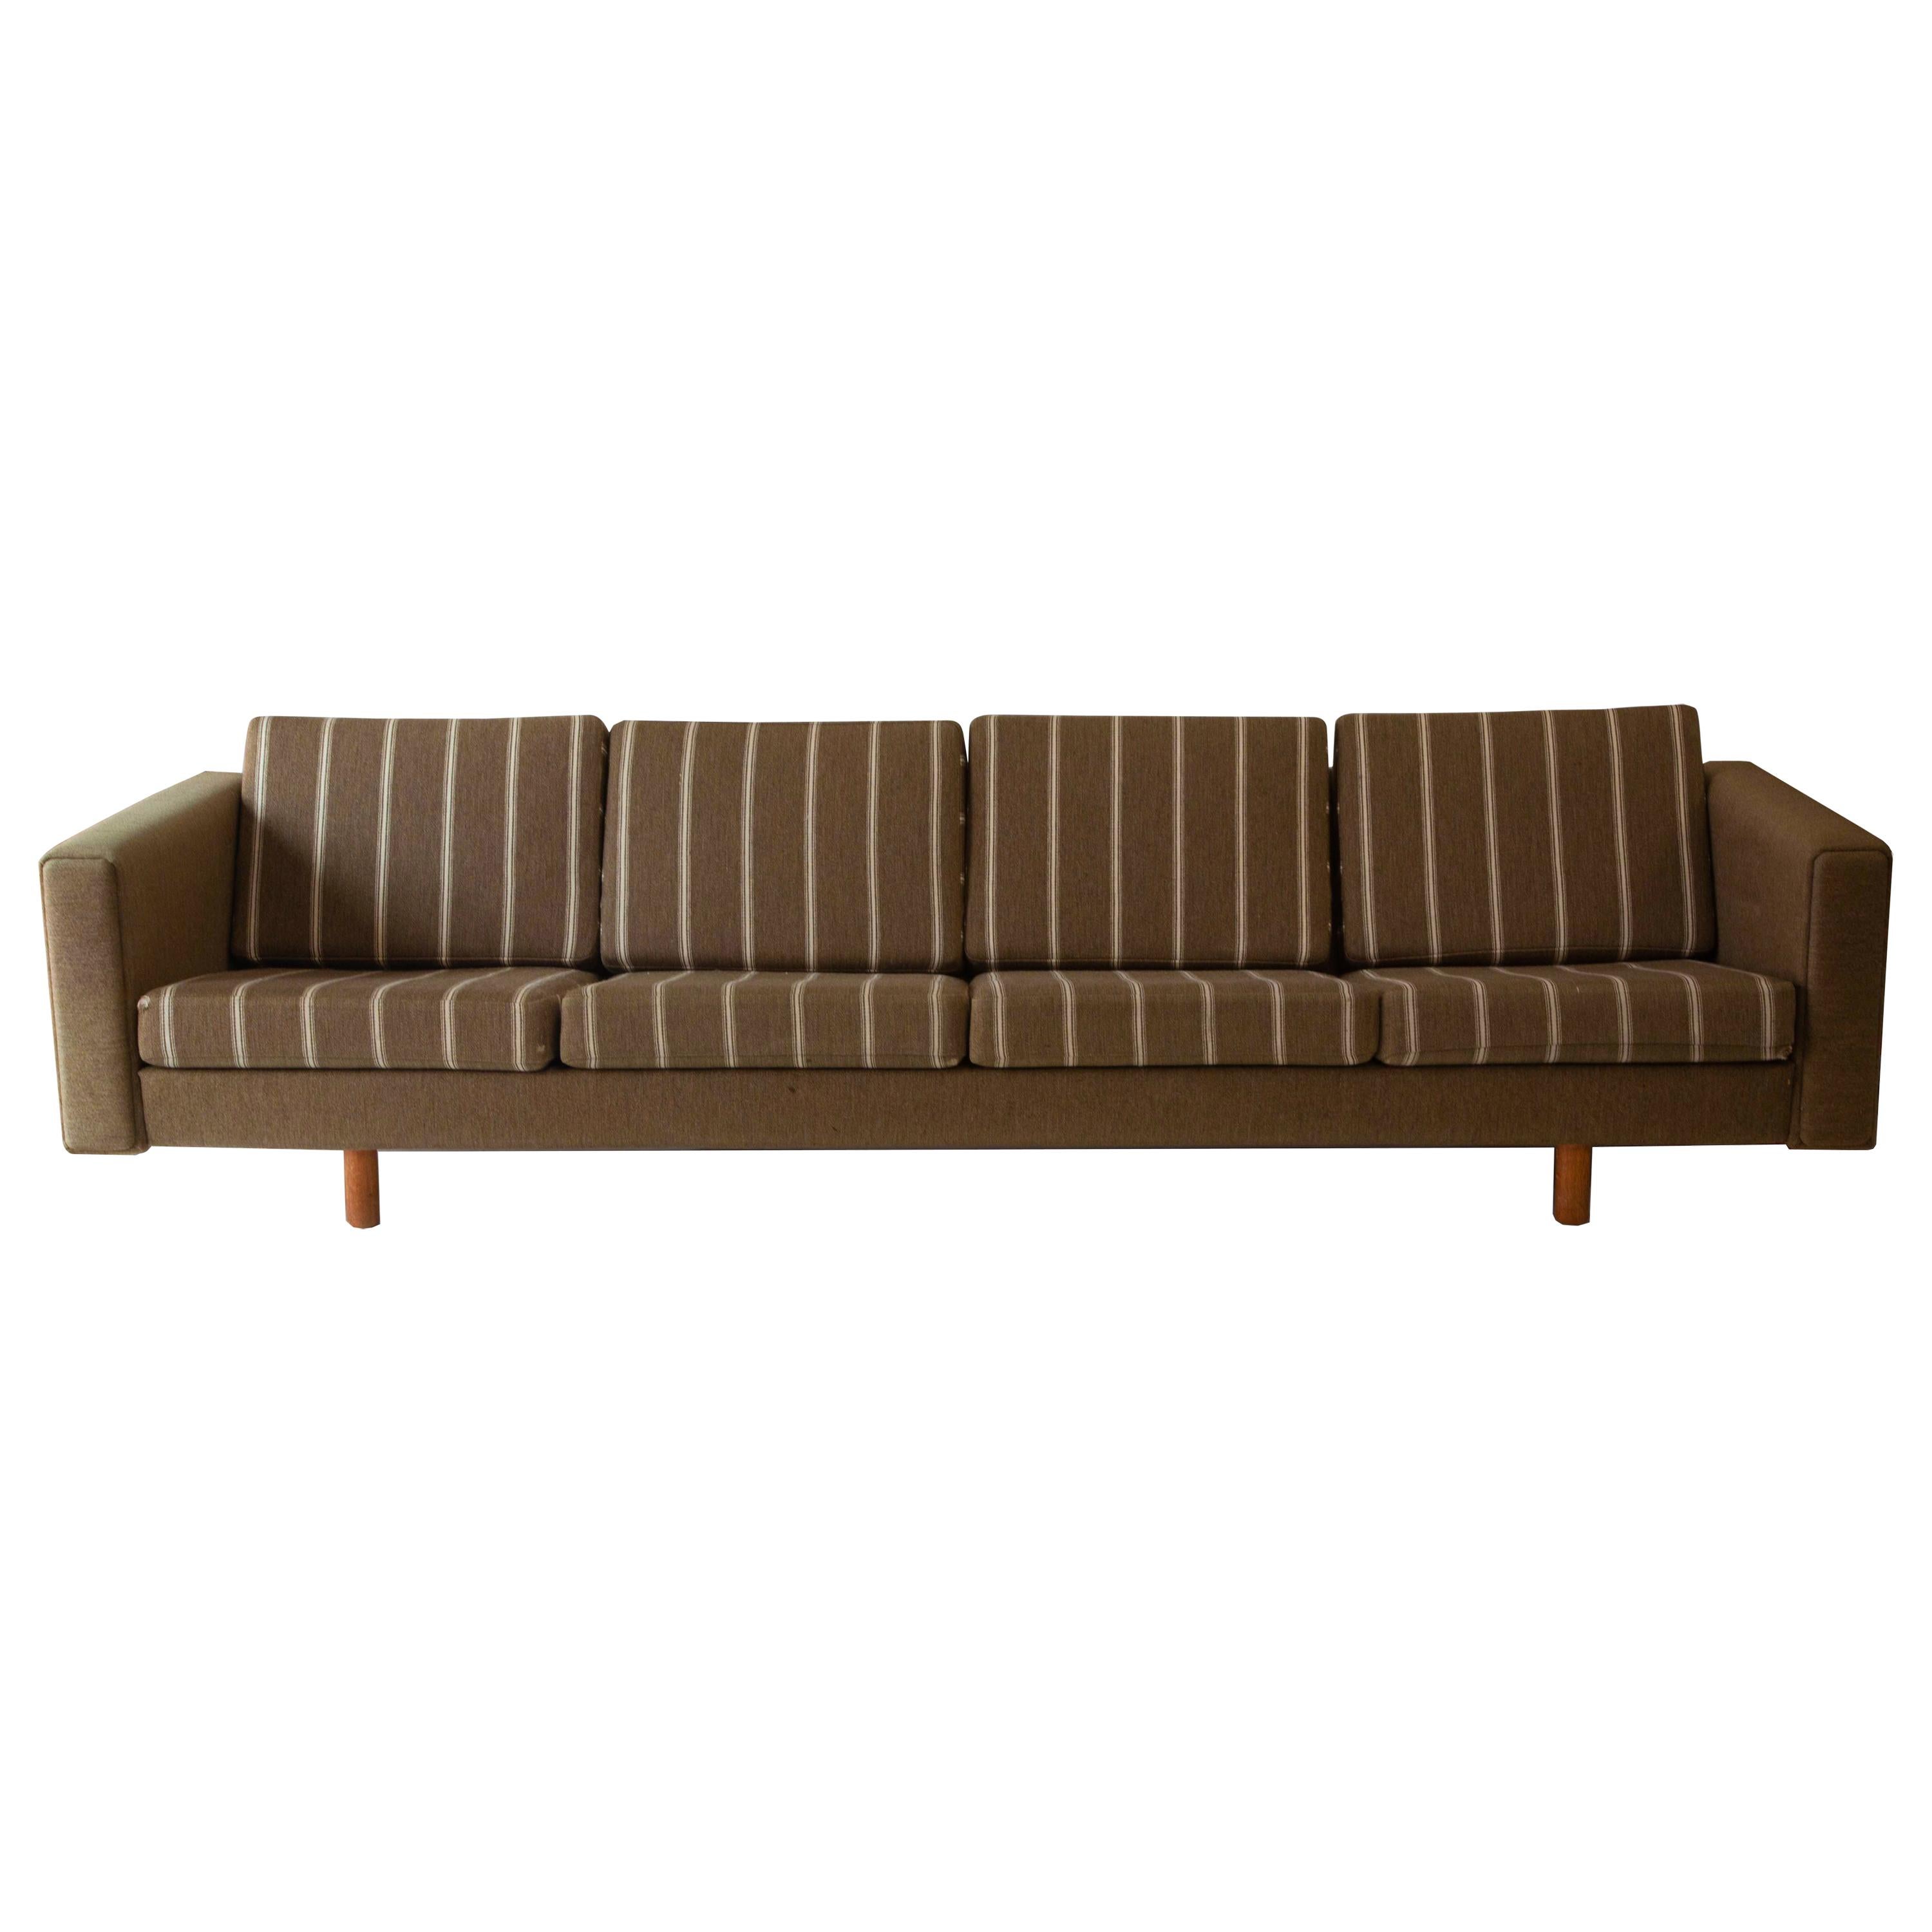 Four-Seat Sofa by Wegner for GETAMA